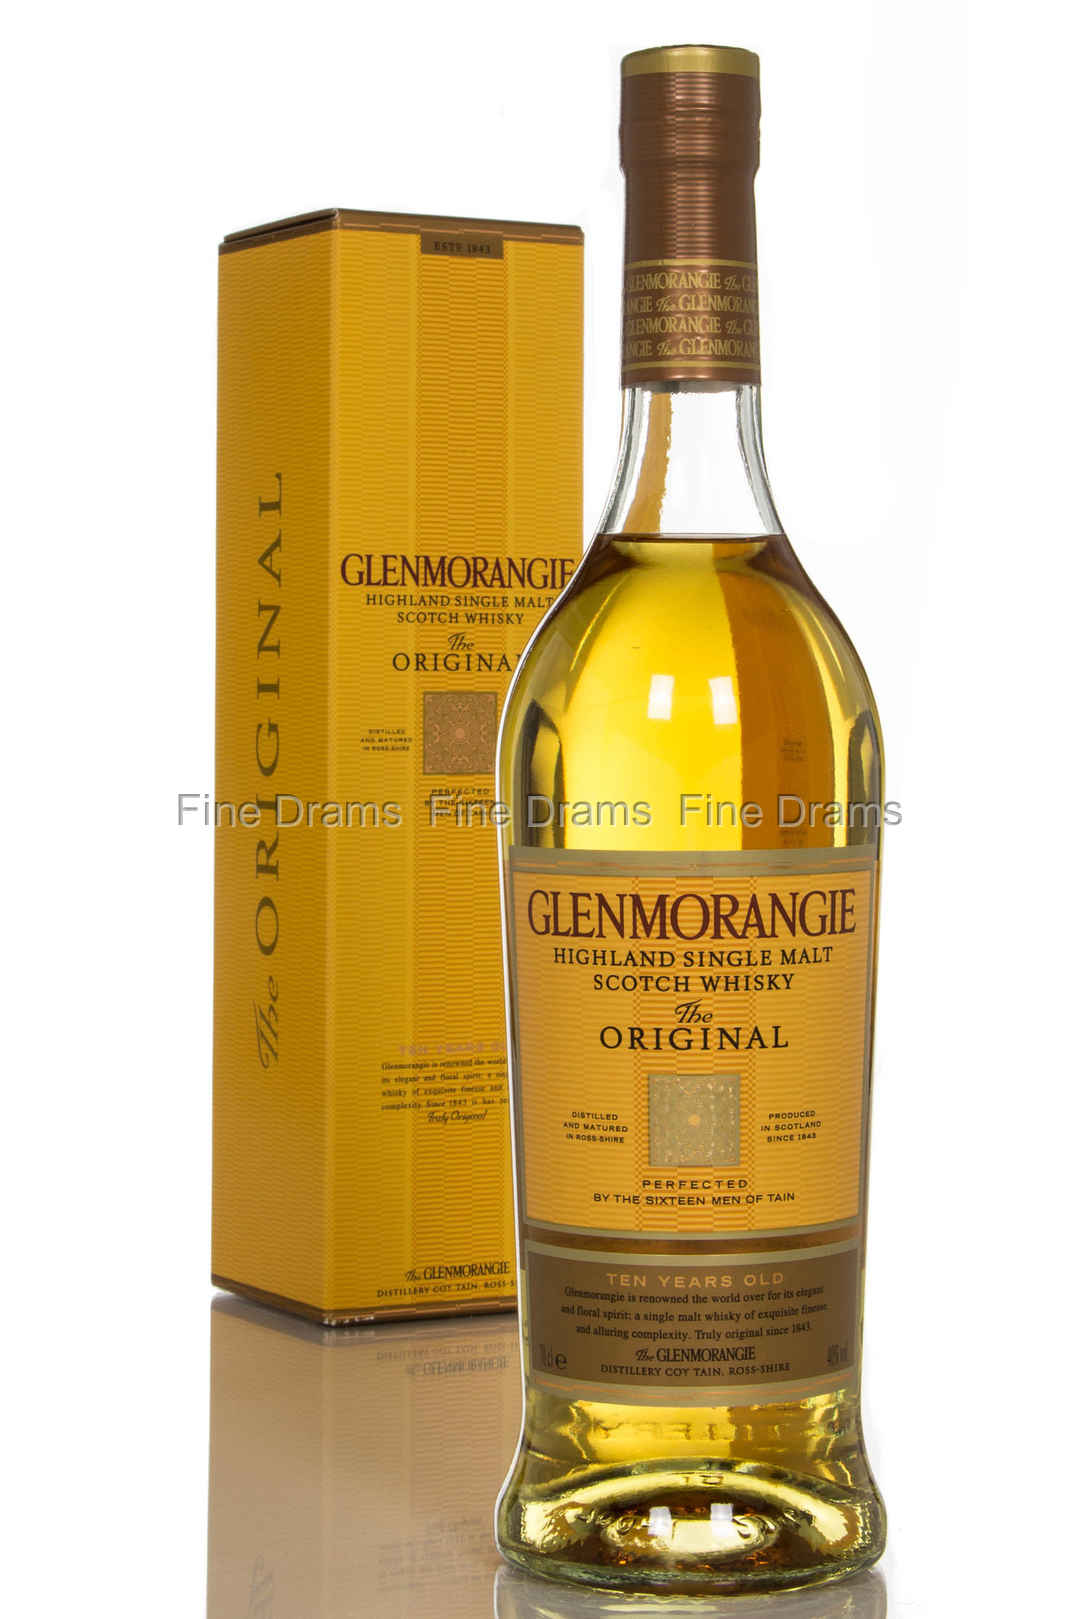 Glenmorangie, The Original 10 Year Old